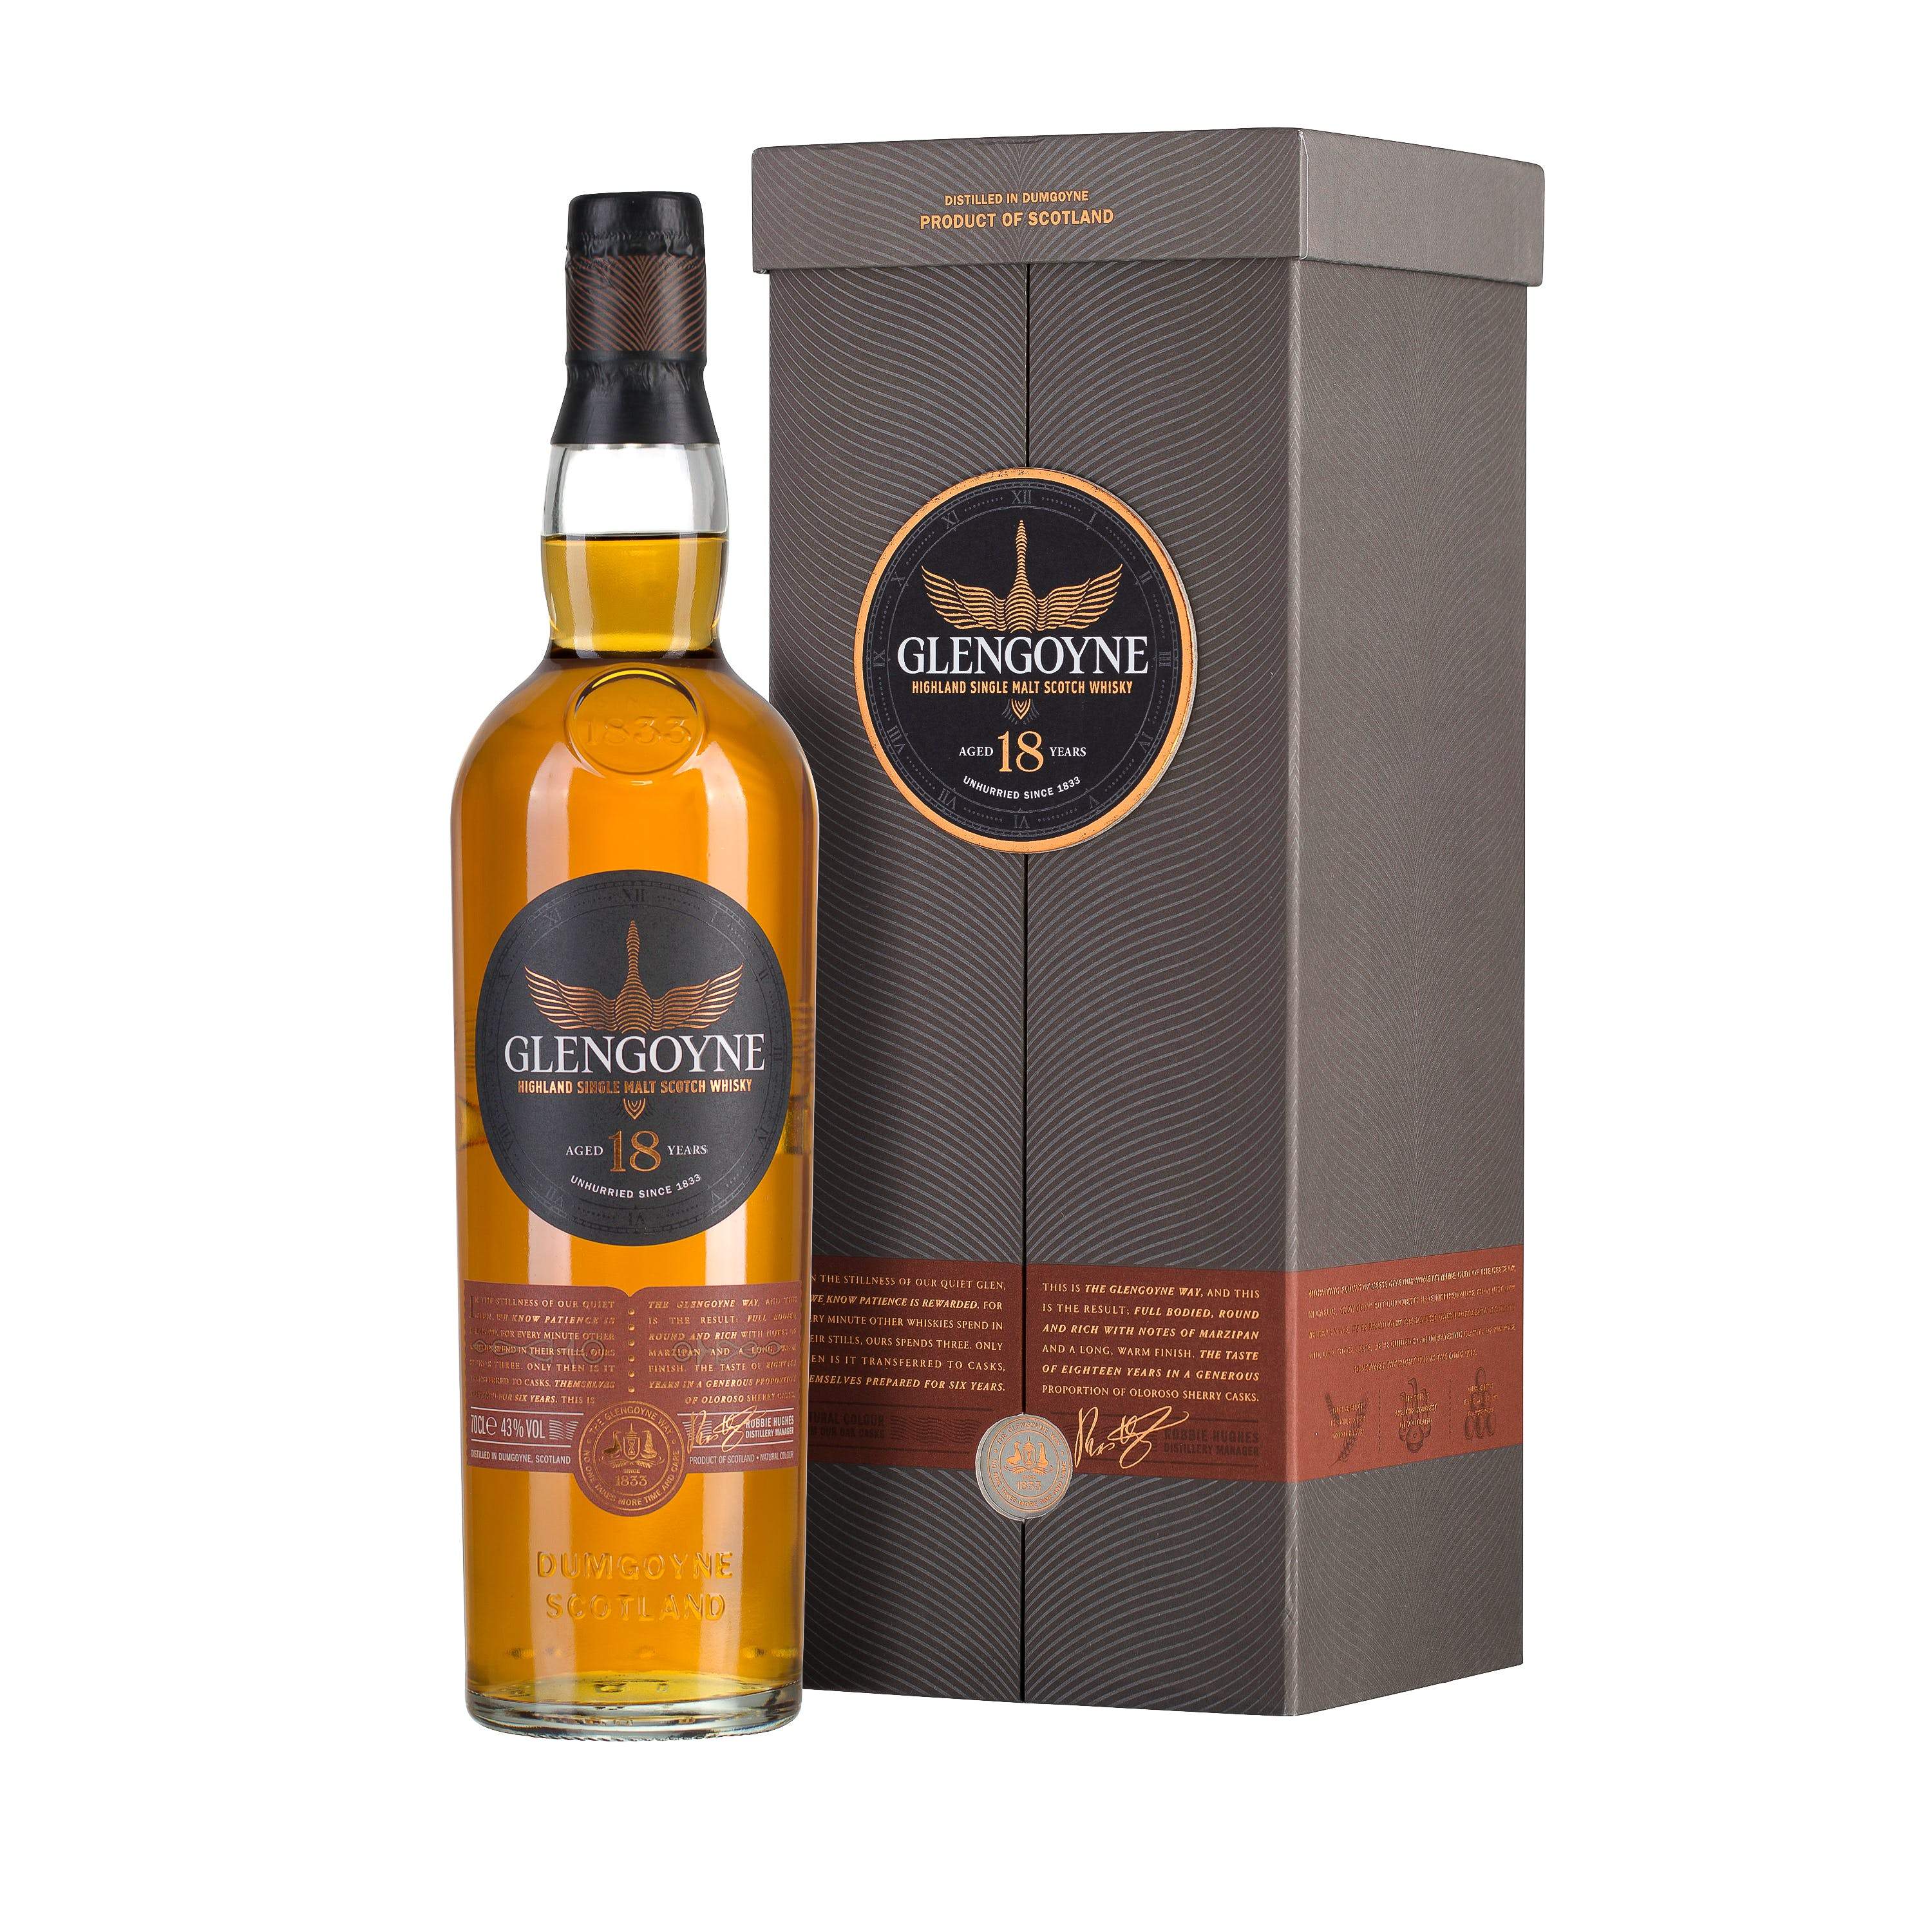 Buy Glengoyne 18 Year Old Scotch Whisky Online -Craft City